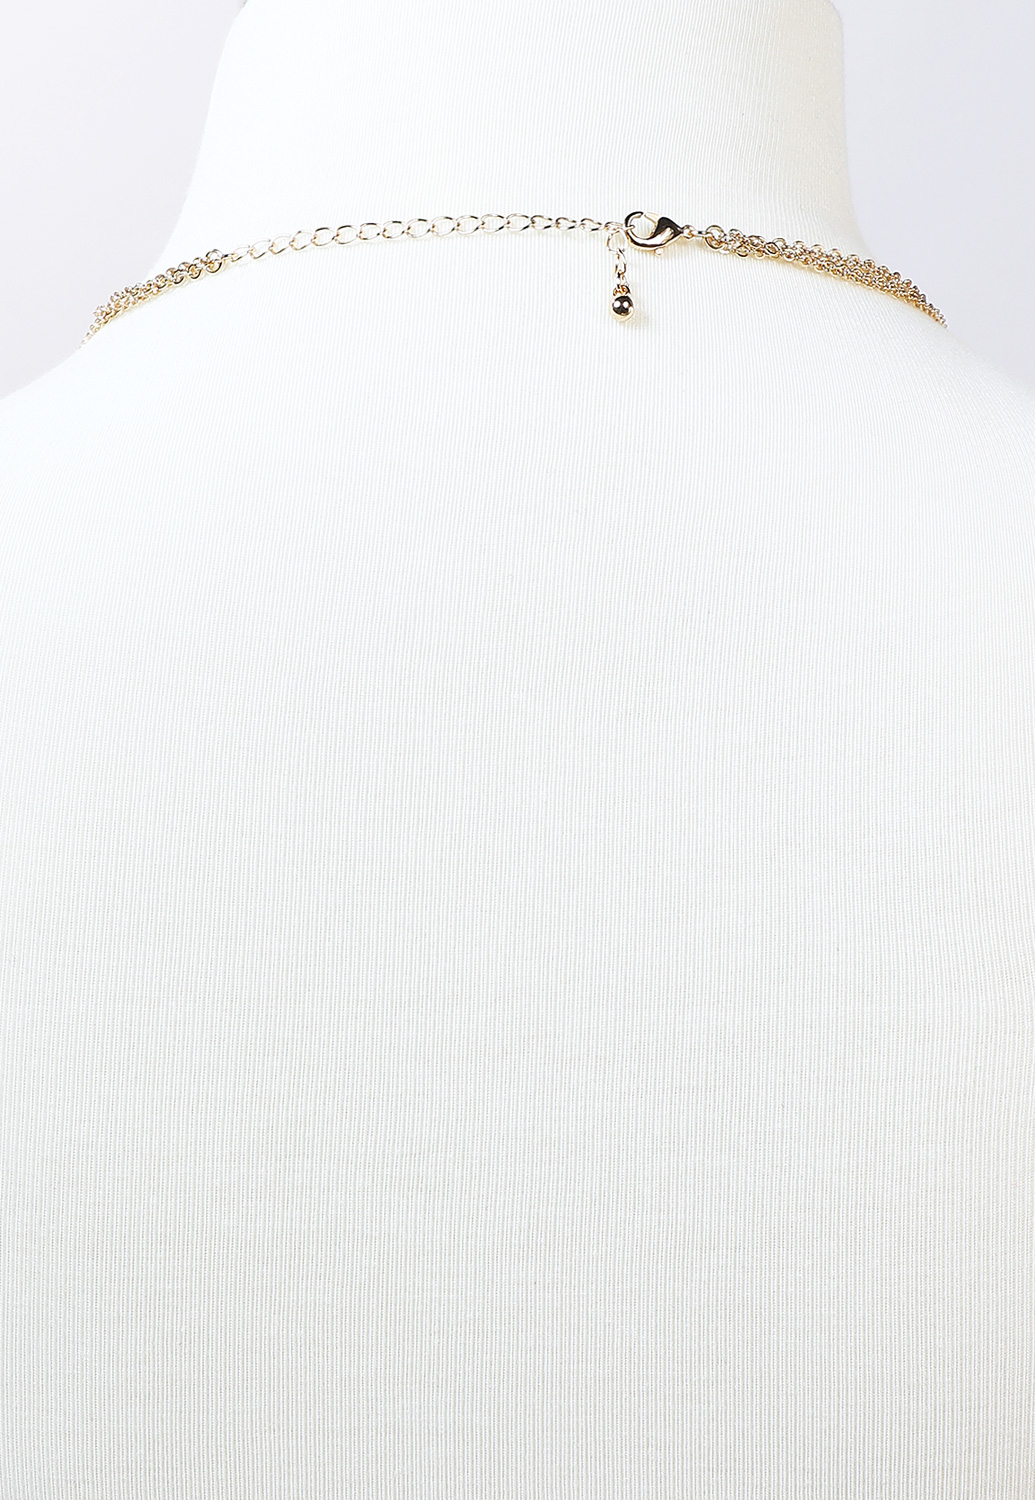 Metallic Pendant Necklace